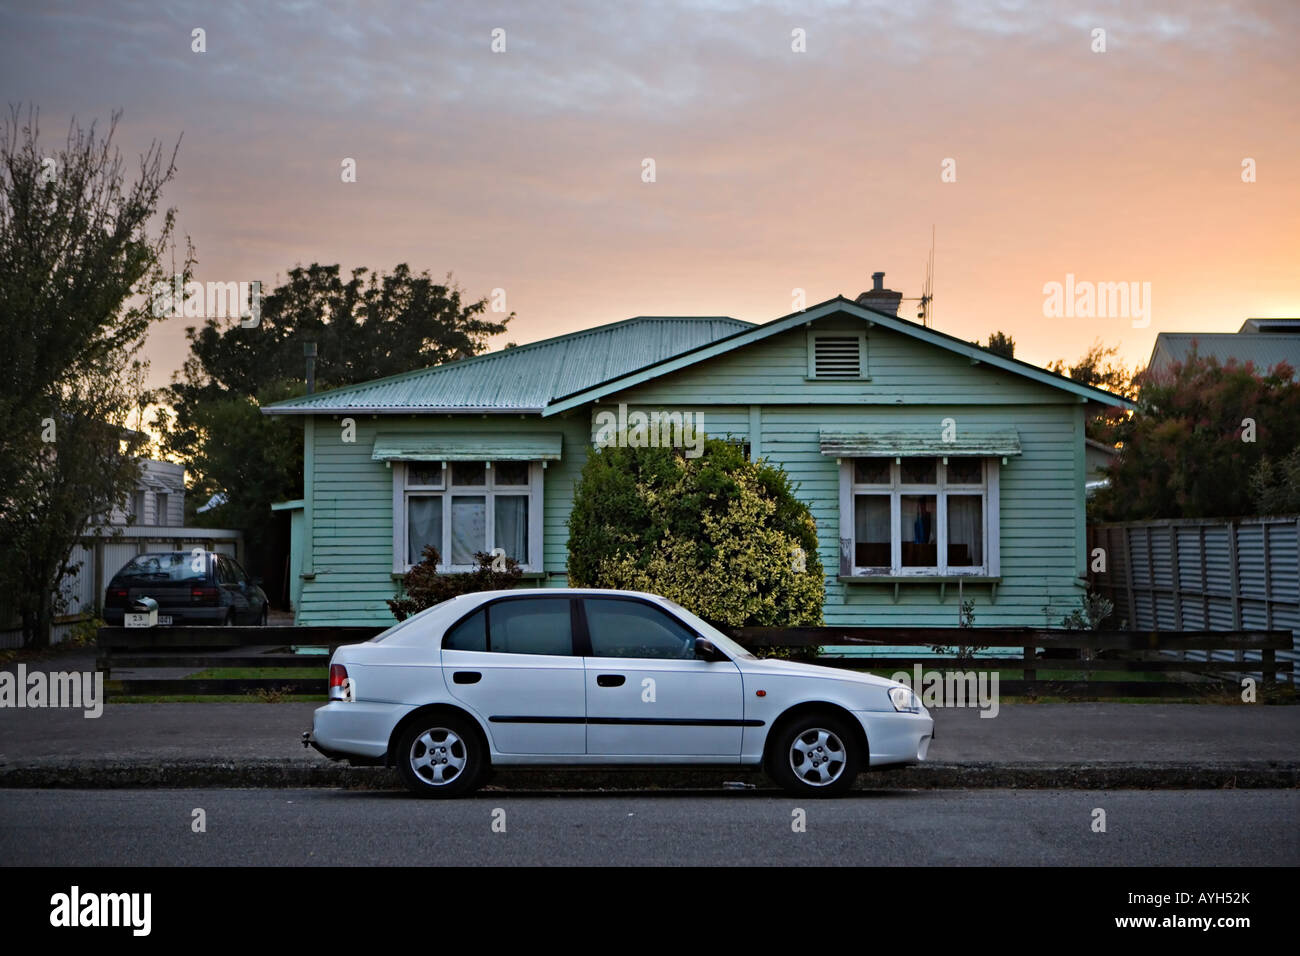 Haus Palmerston North New Zealand Stockfoto